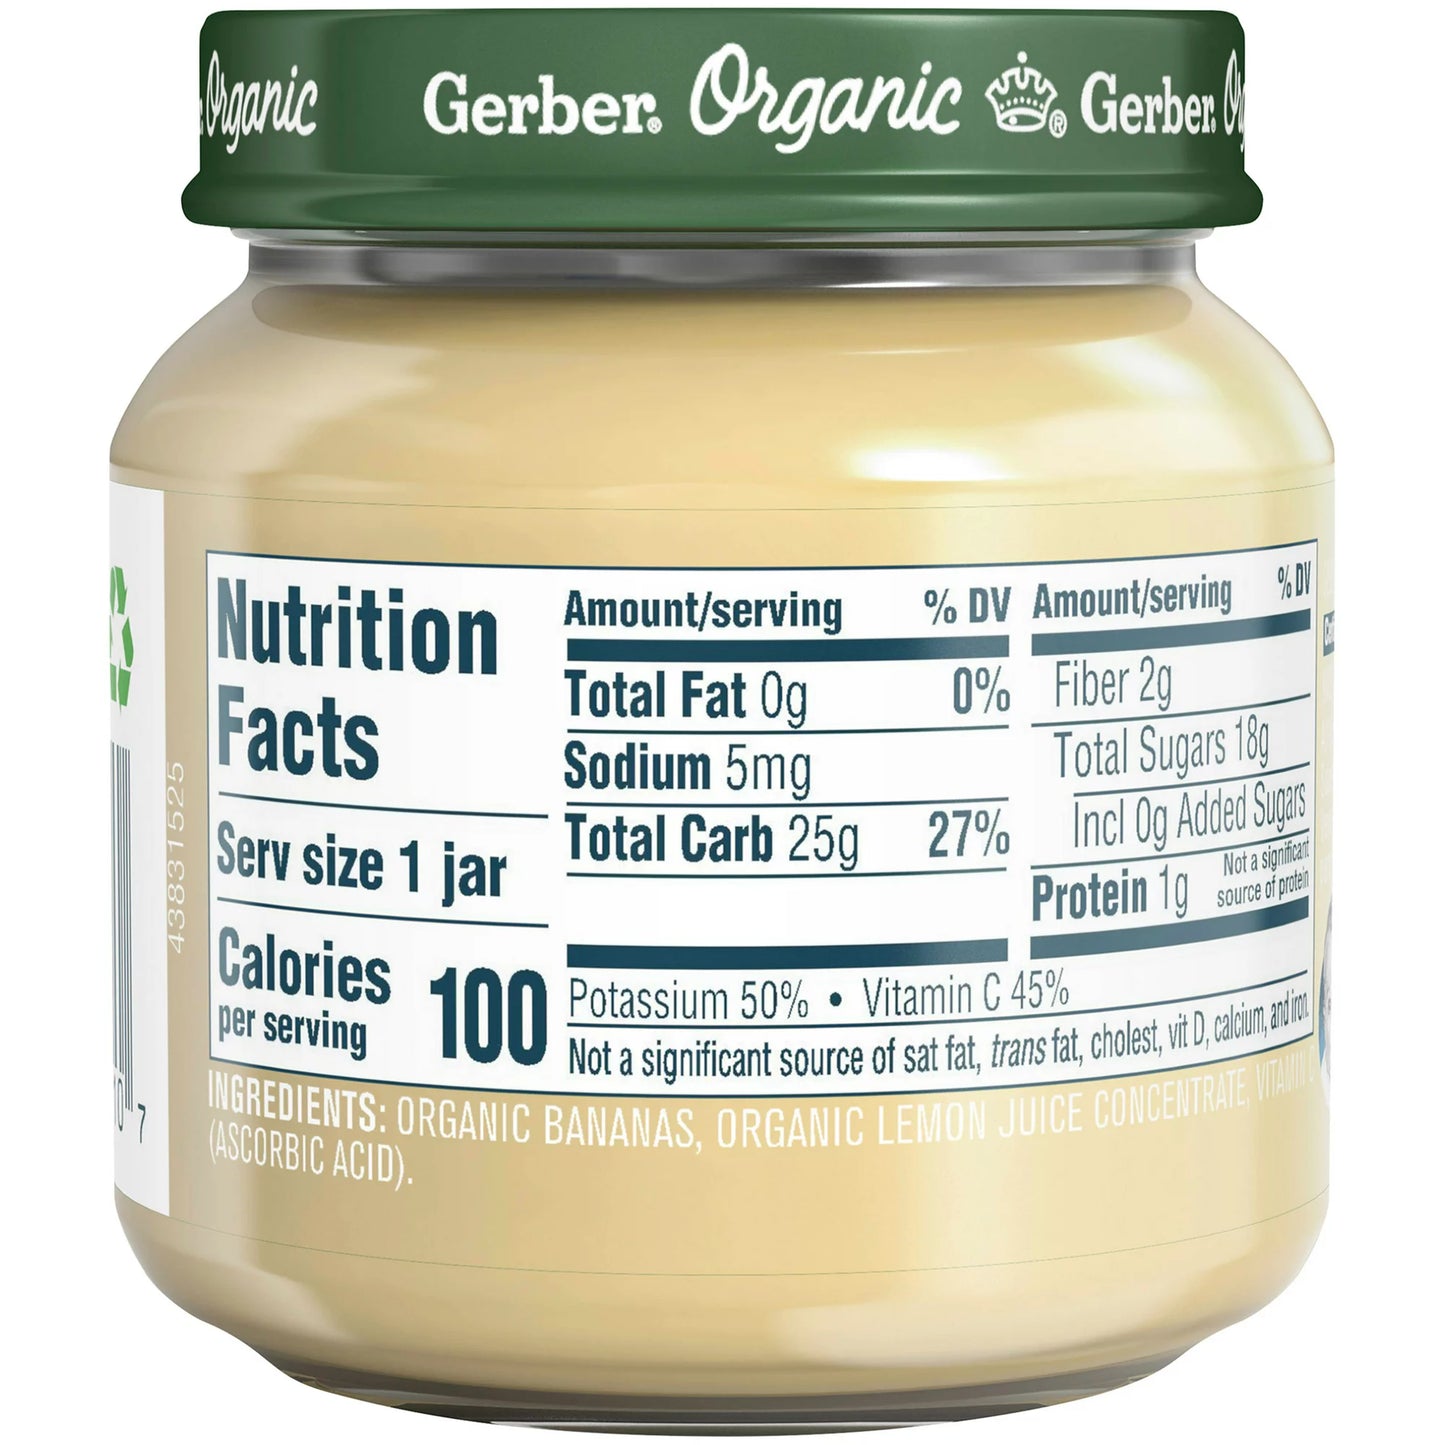 Gerber 1st Foods Organic for Baby Baby Food, Banana, 4 oz Jar